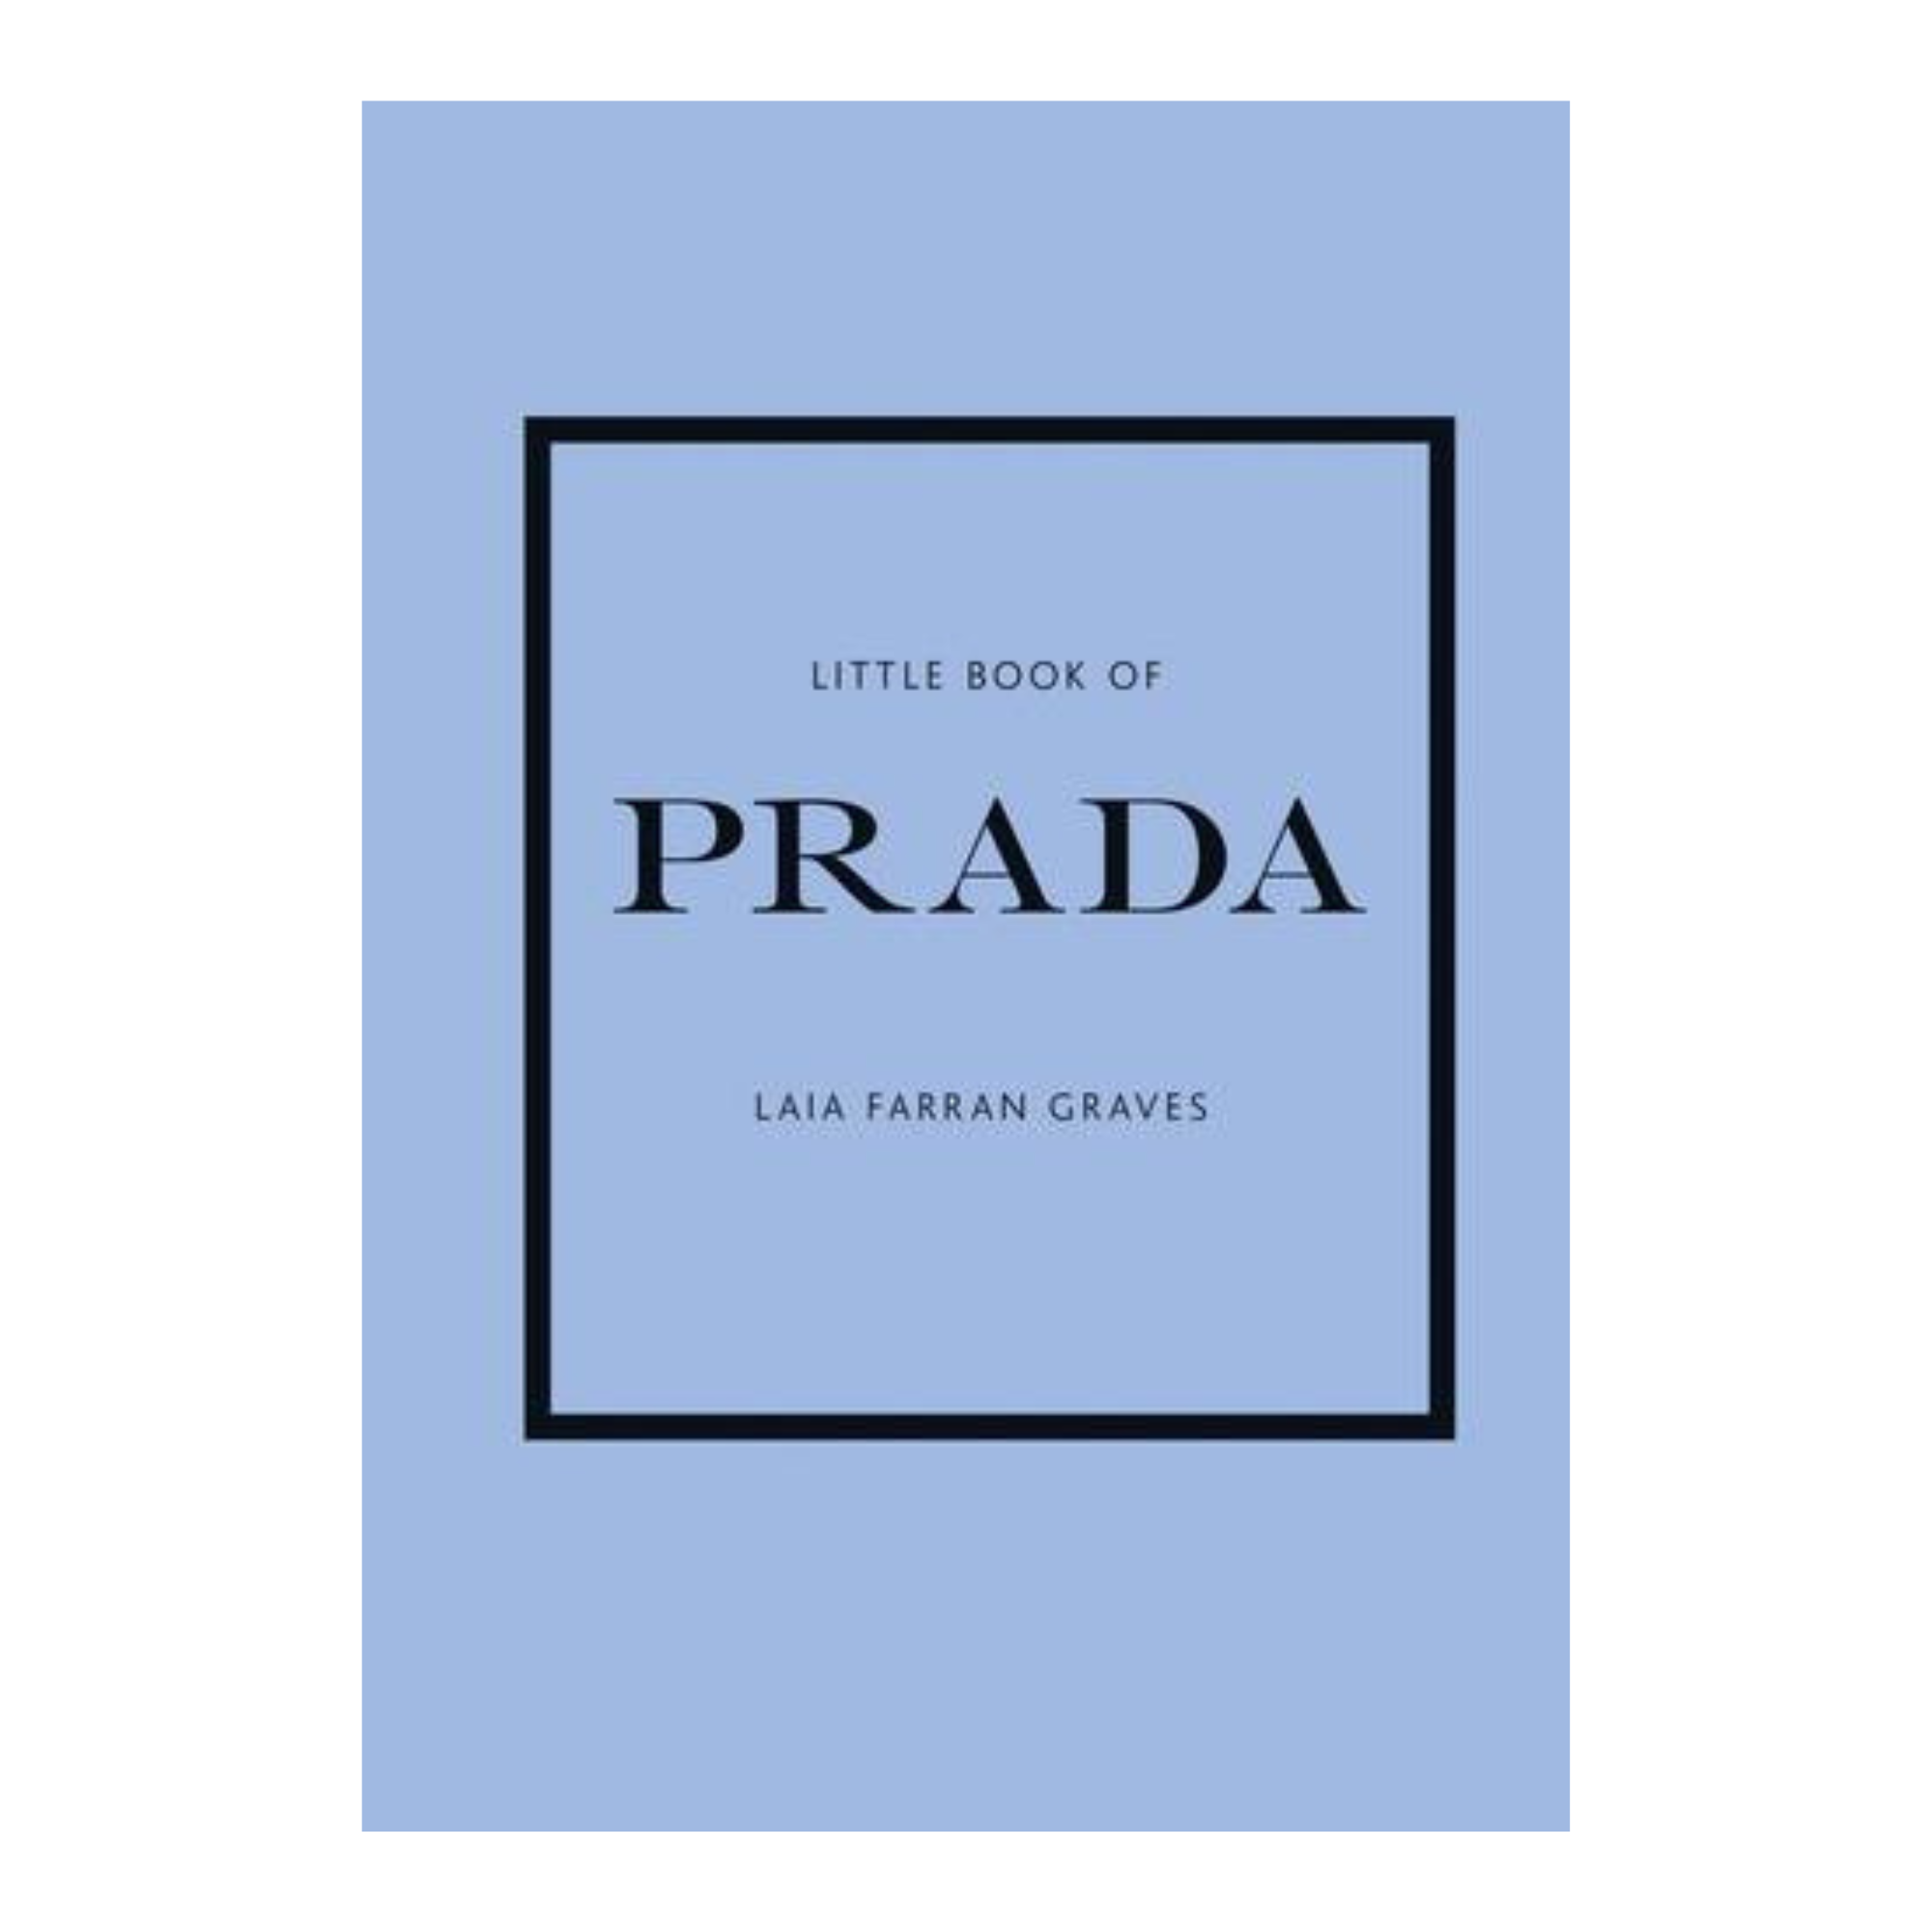 LITTLE BOOK OF PRADA